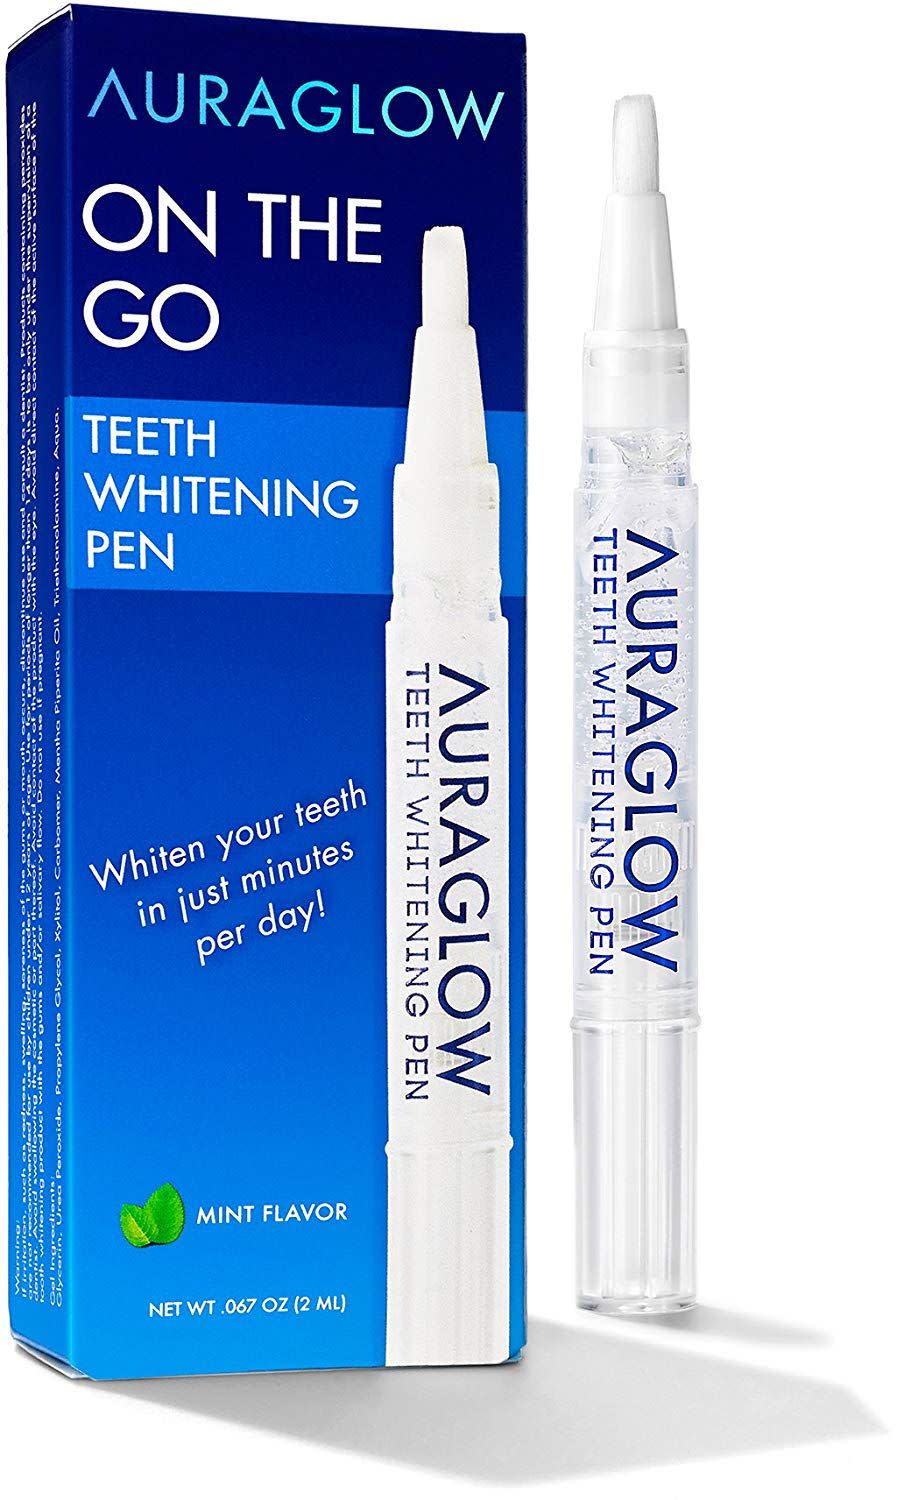 10) Teeth Whitening Pen